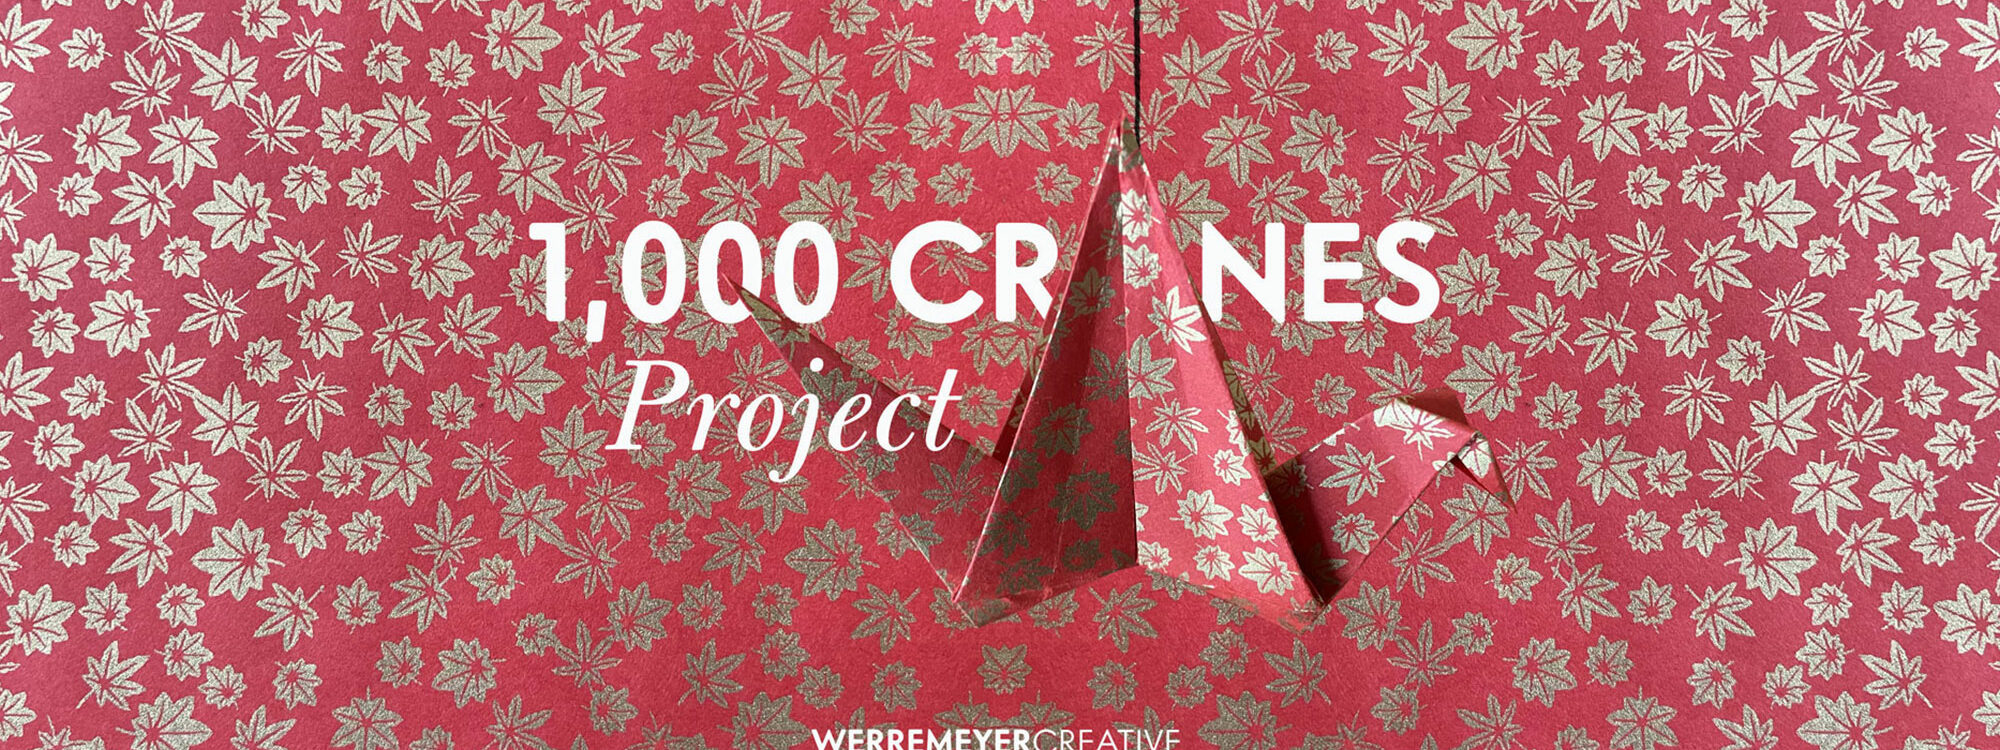 Werremeyer 1000 paper cranes project